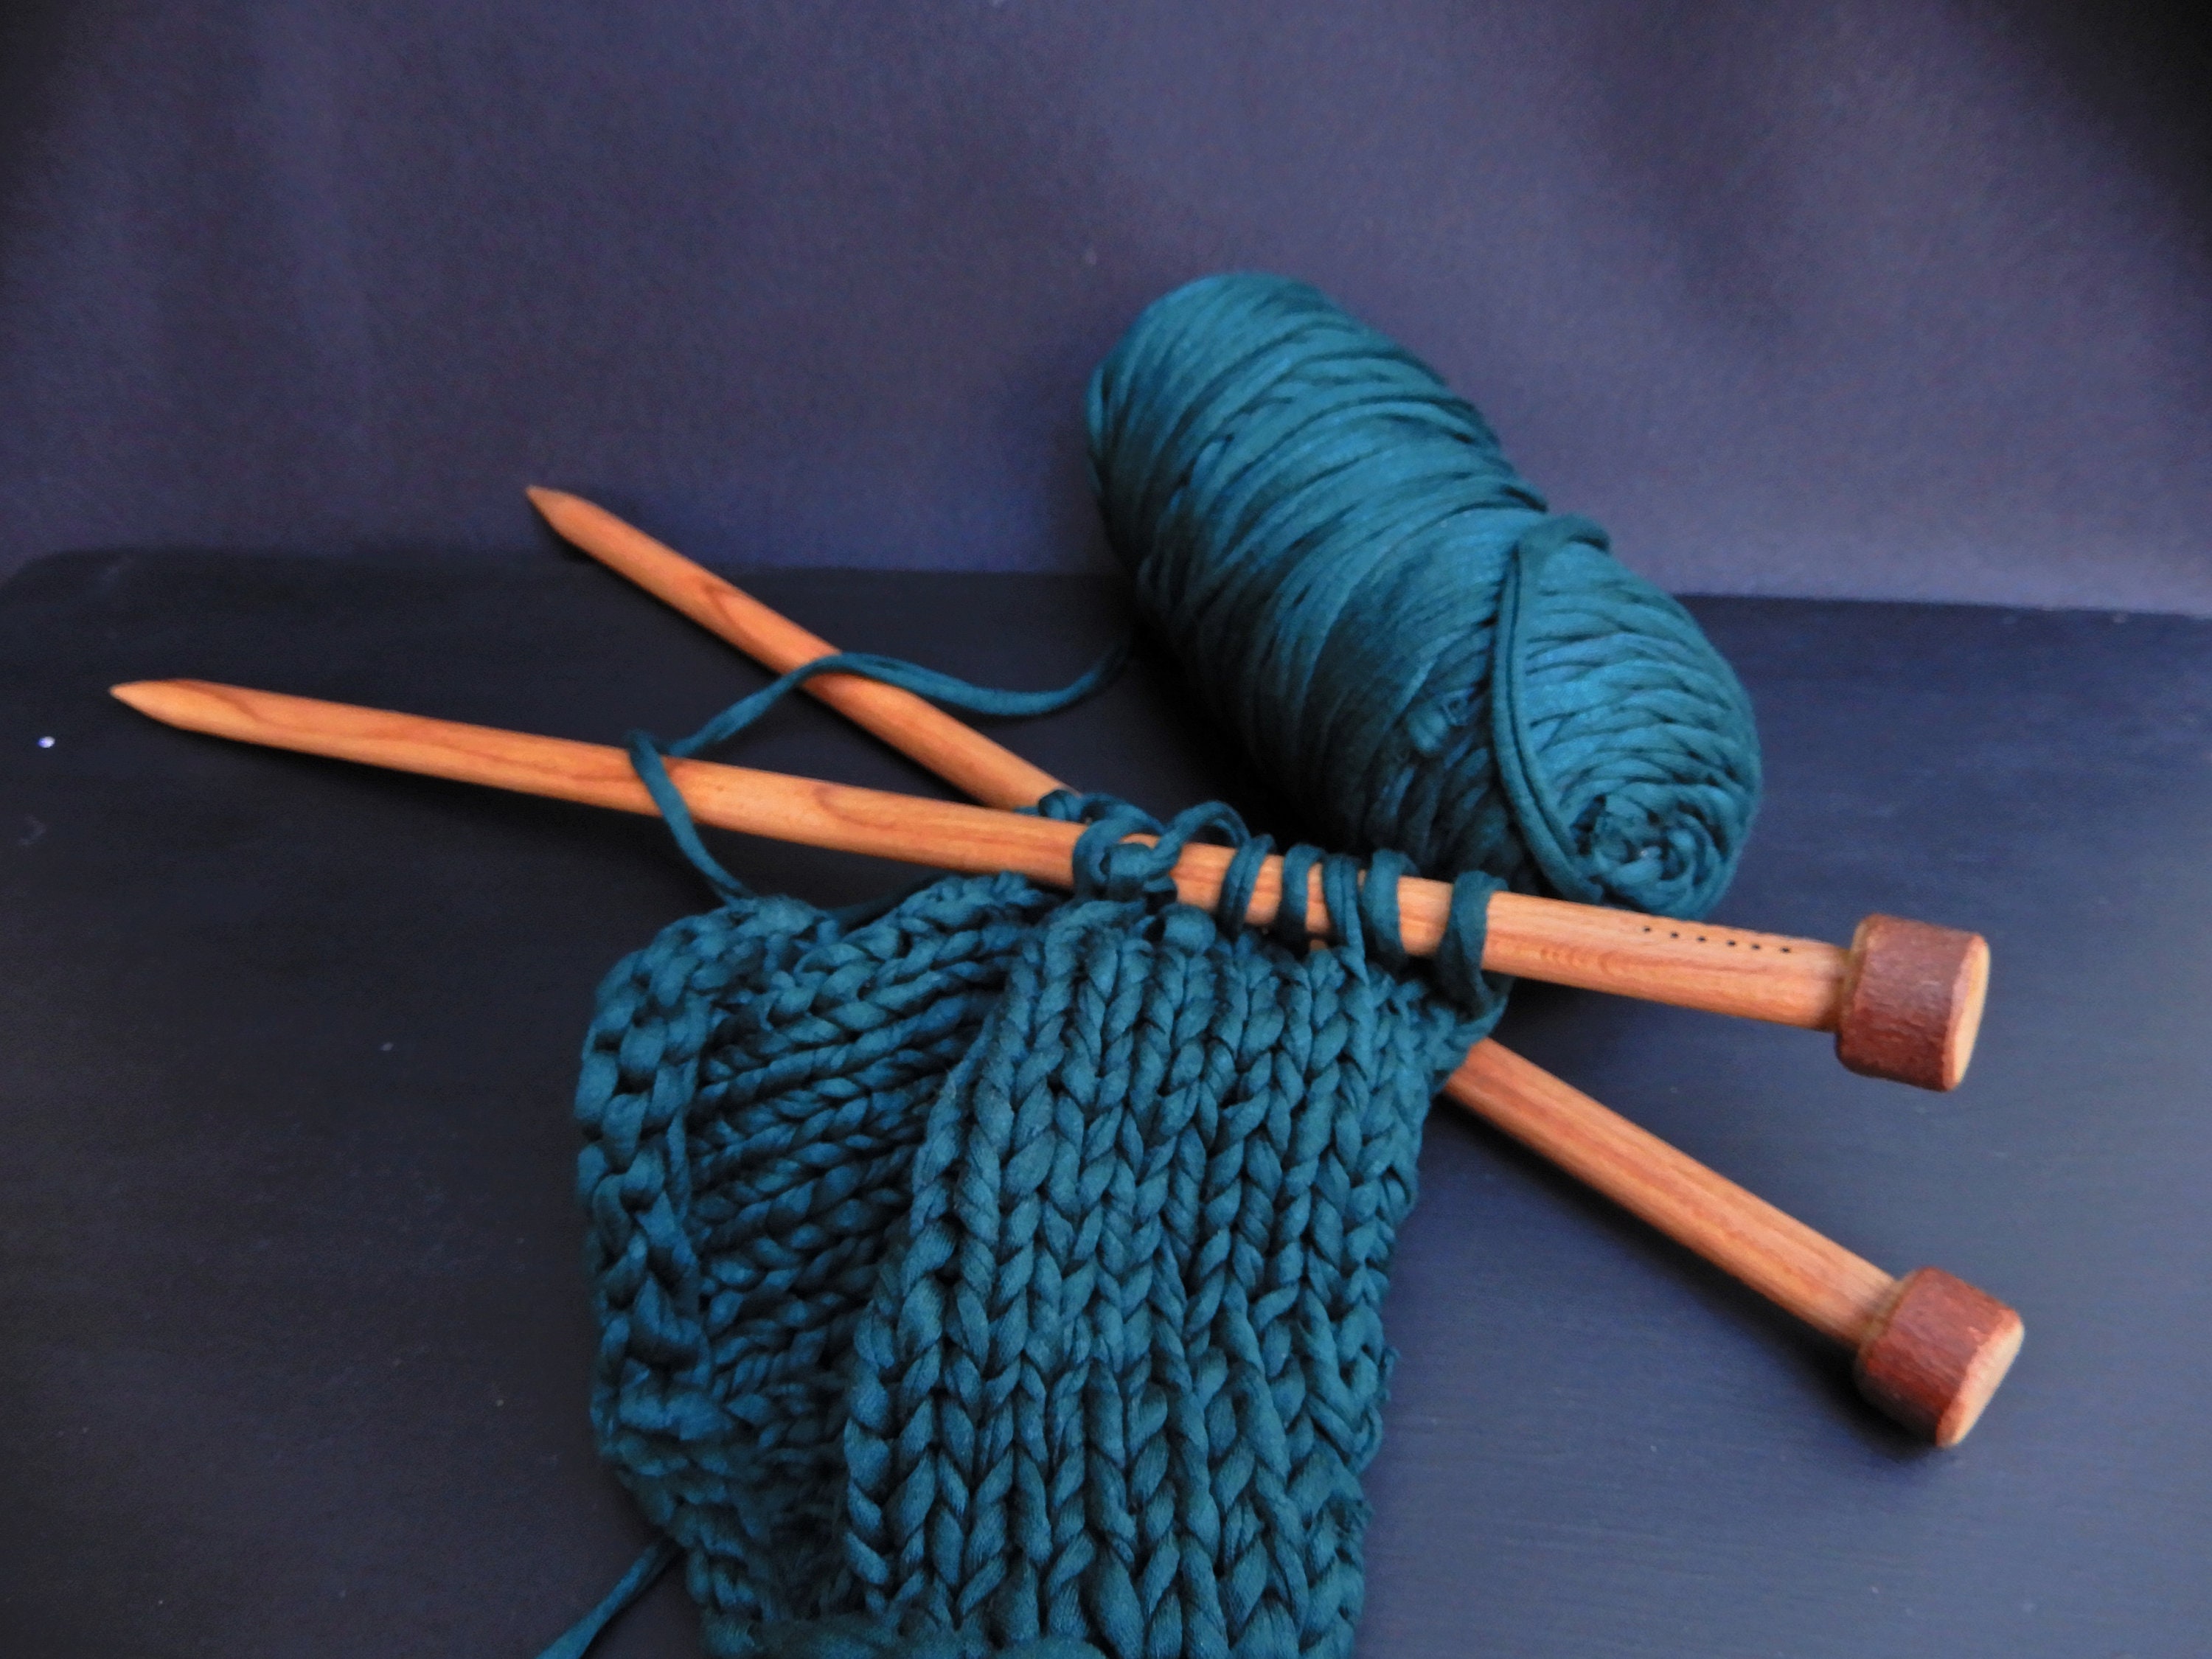 Boye Knitting Needles, Sizes 1-17, 10 inches, 14 inches, Single Point,  Knitting Needles, Aluminum Needles, Single Point Knitting Needles